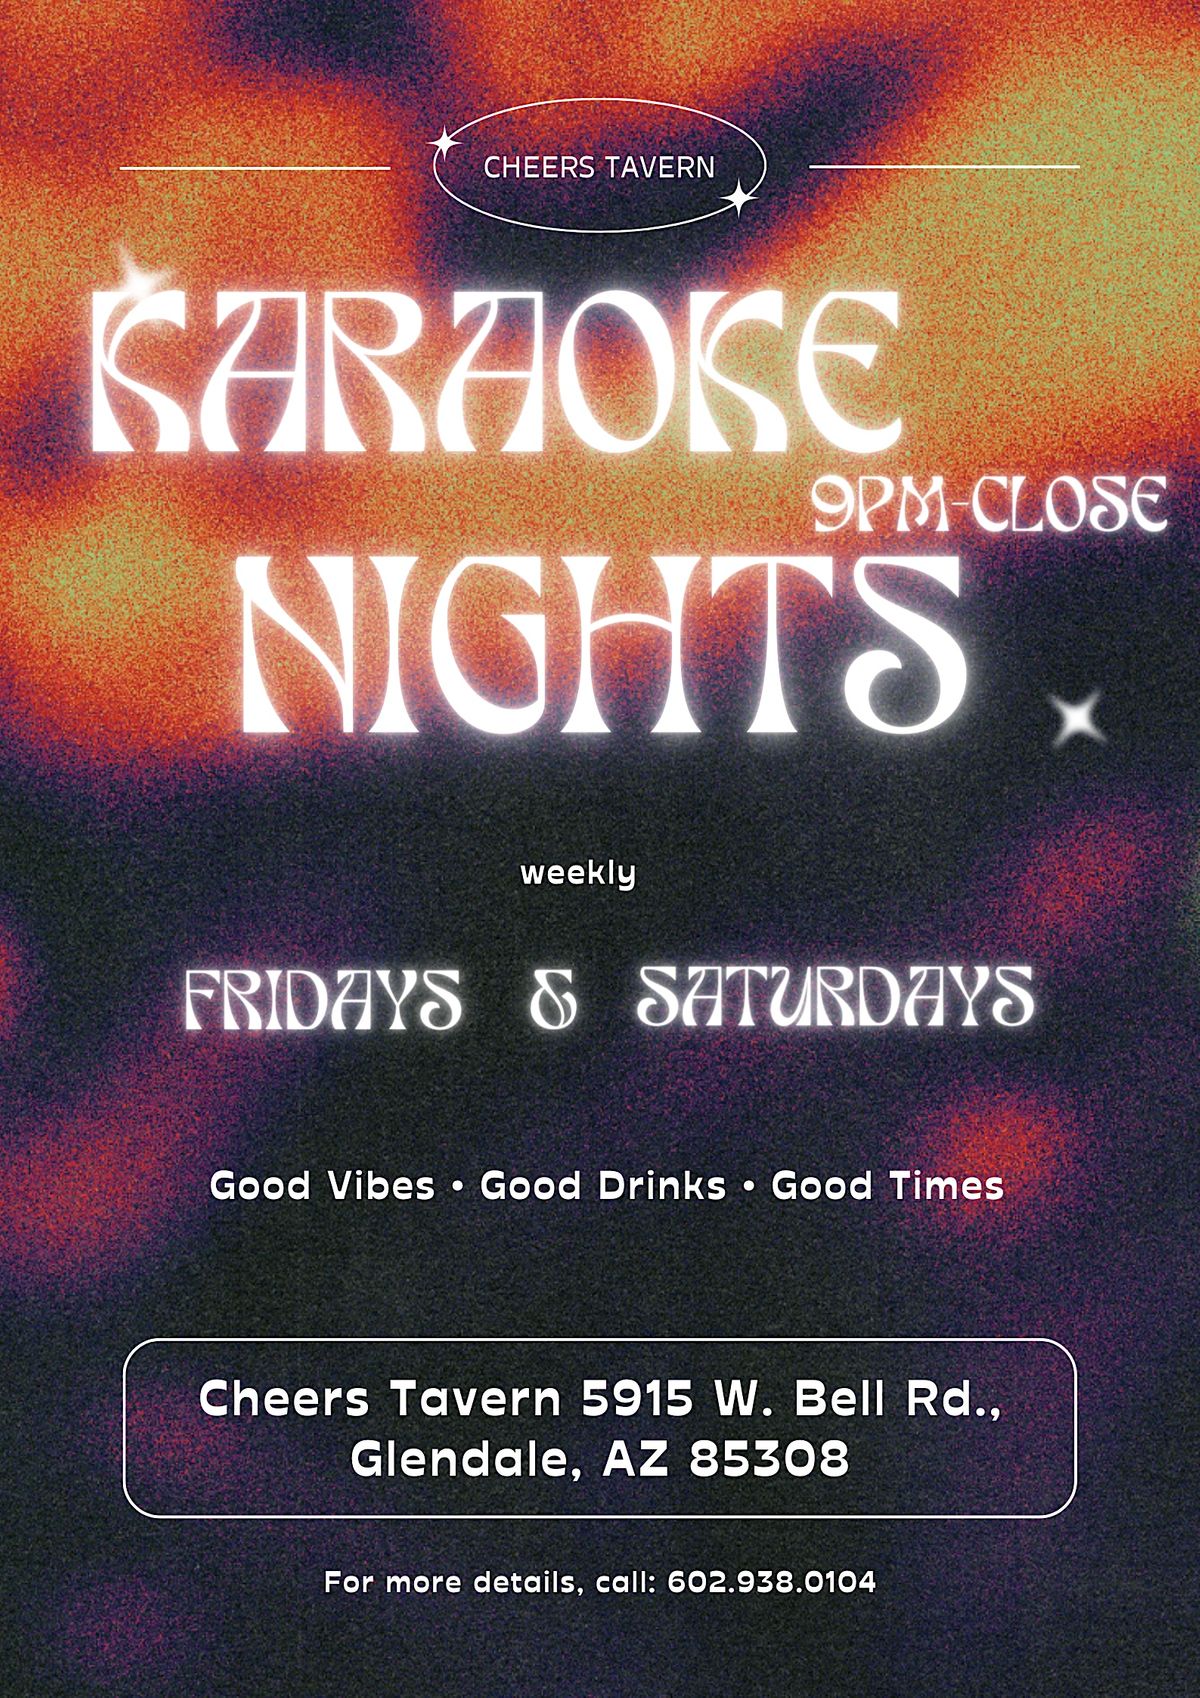 Karaoke: Friday & Saturday Nights at Cheers Tavern - hosted by DJ AJ!